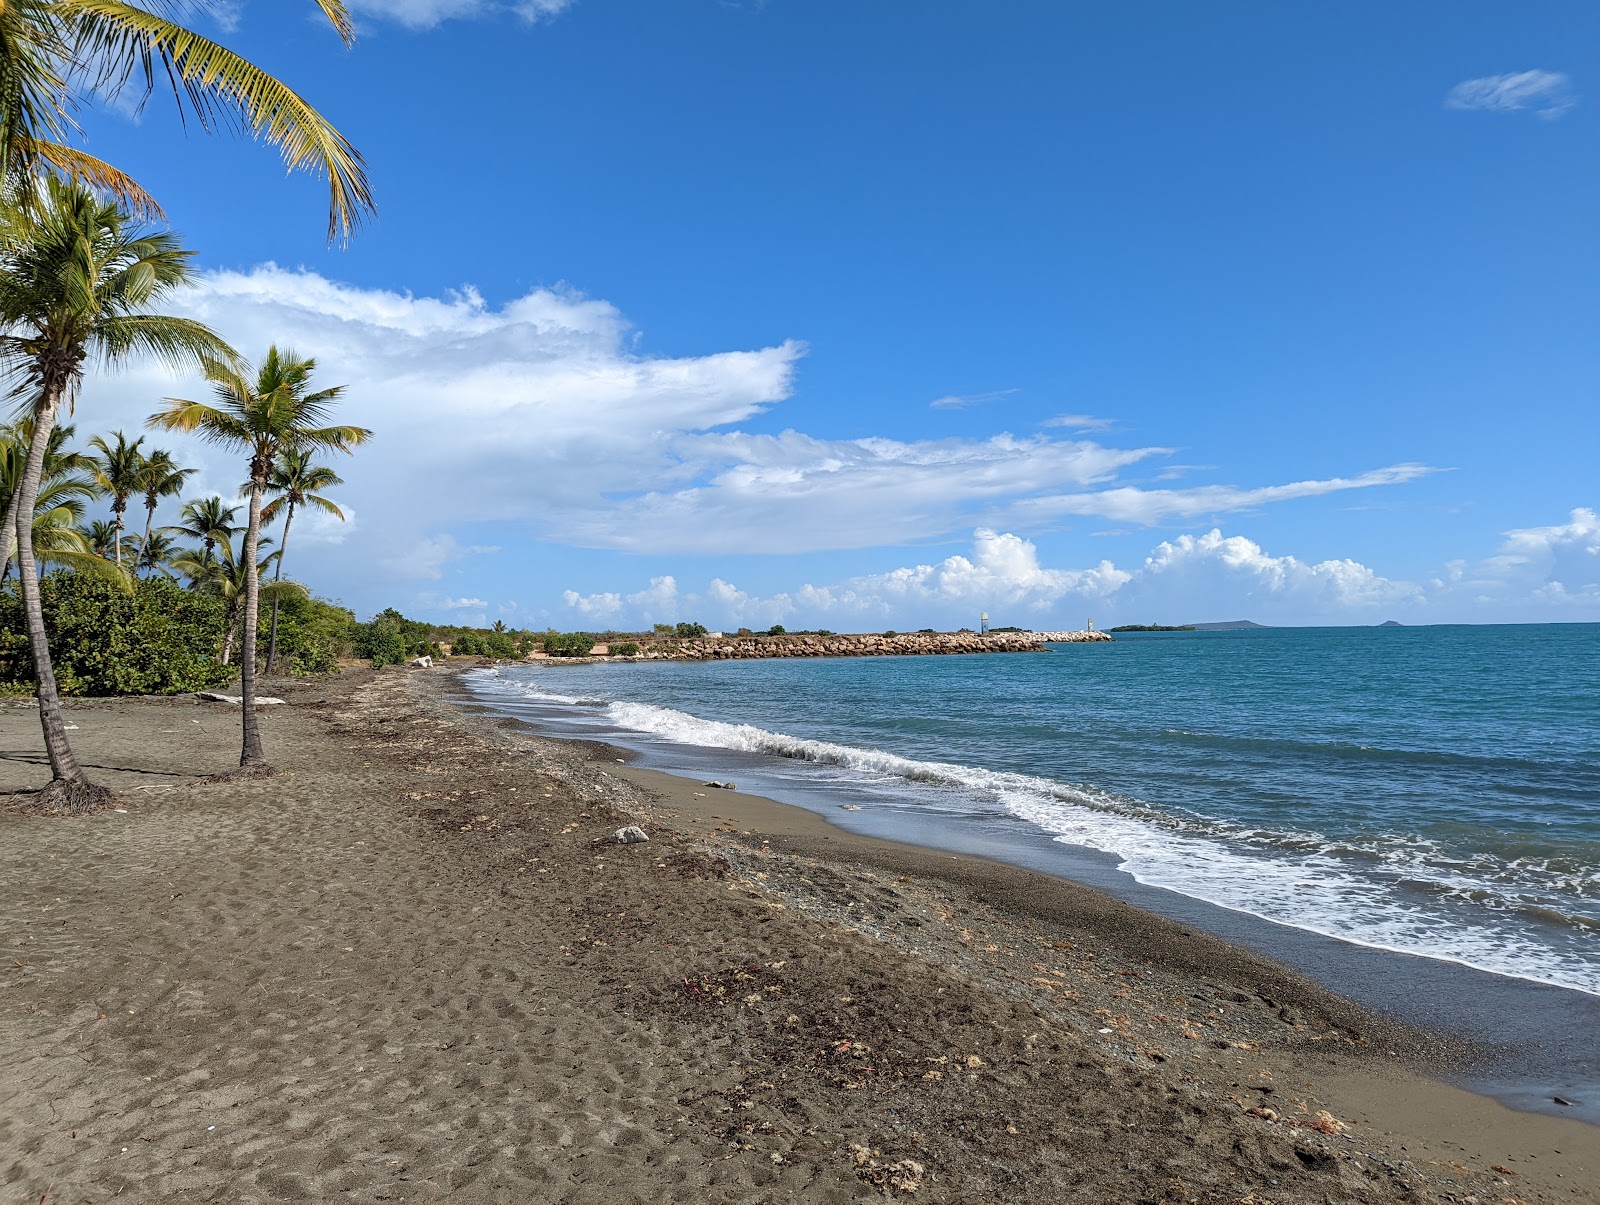 Foto di Playa Hilton Ponce con una superficie del sabbia con ciottolame